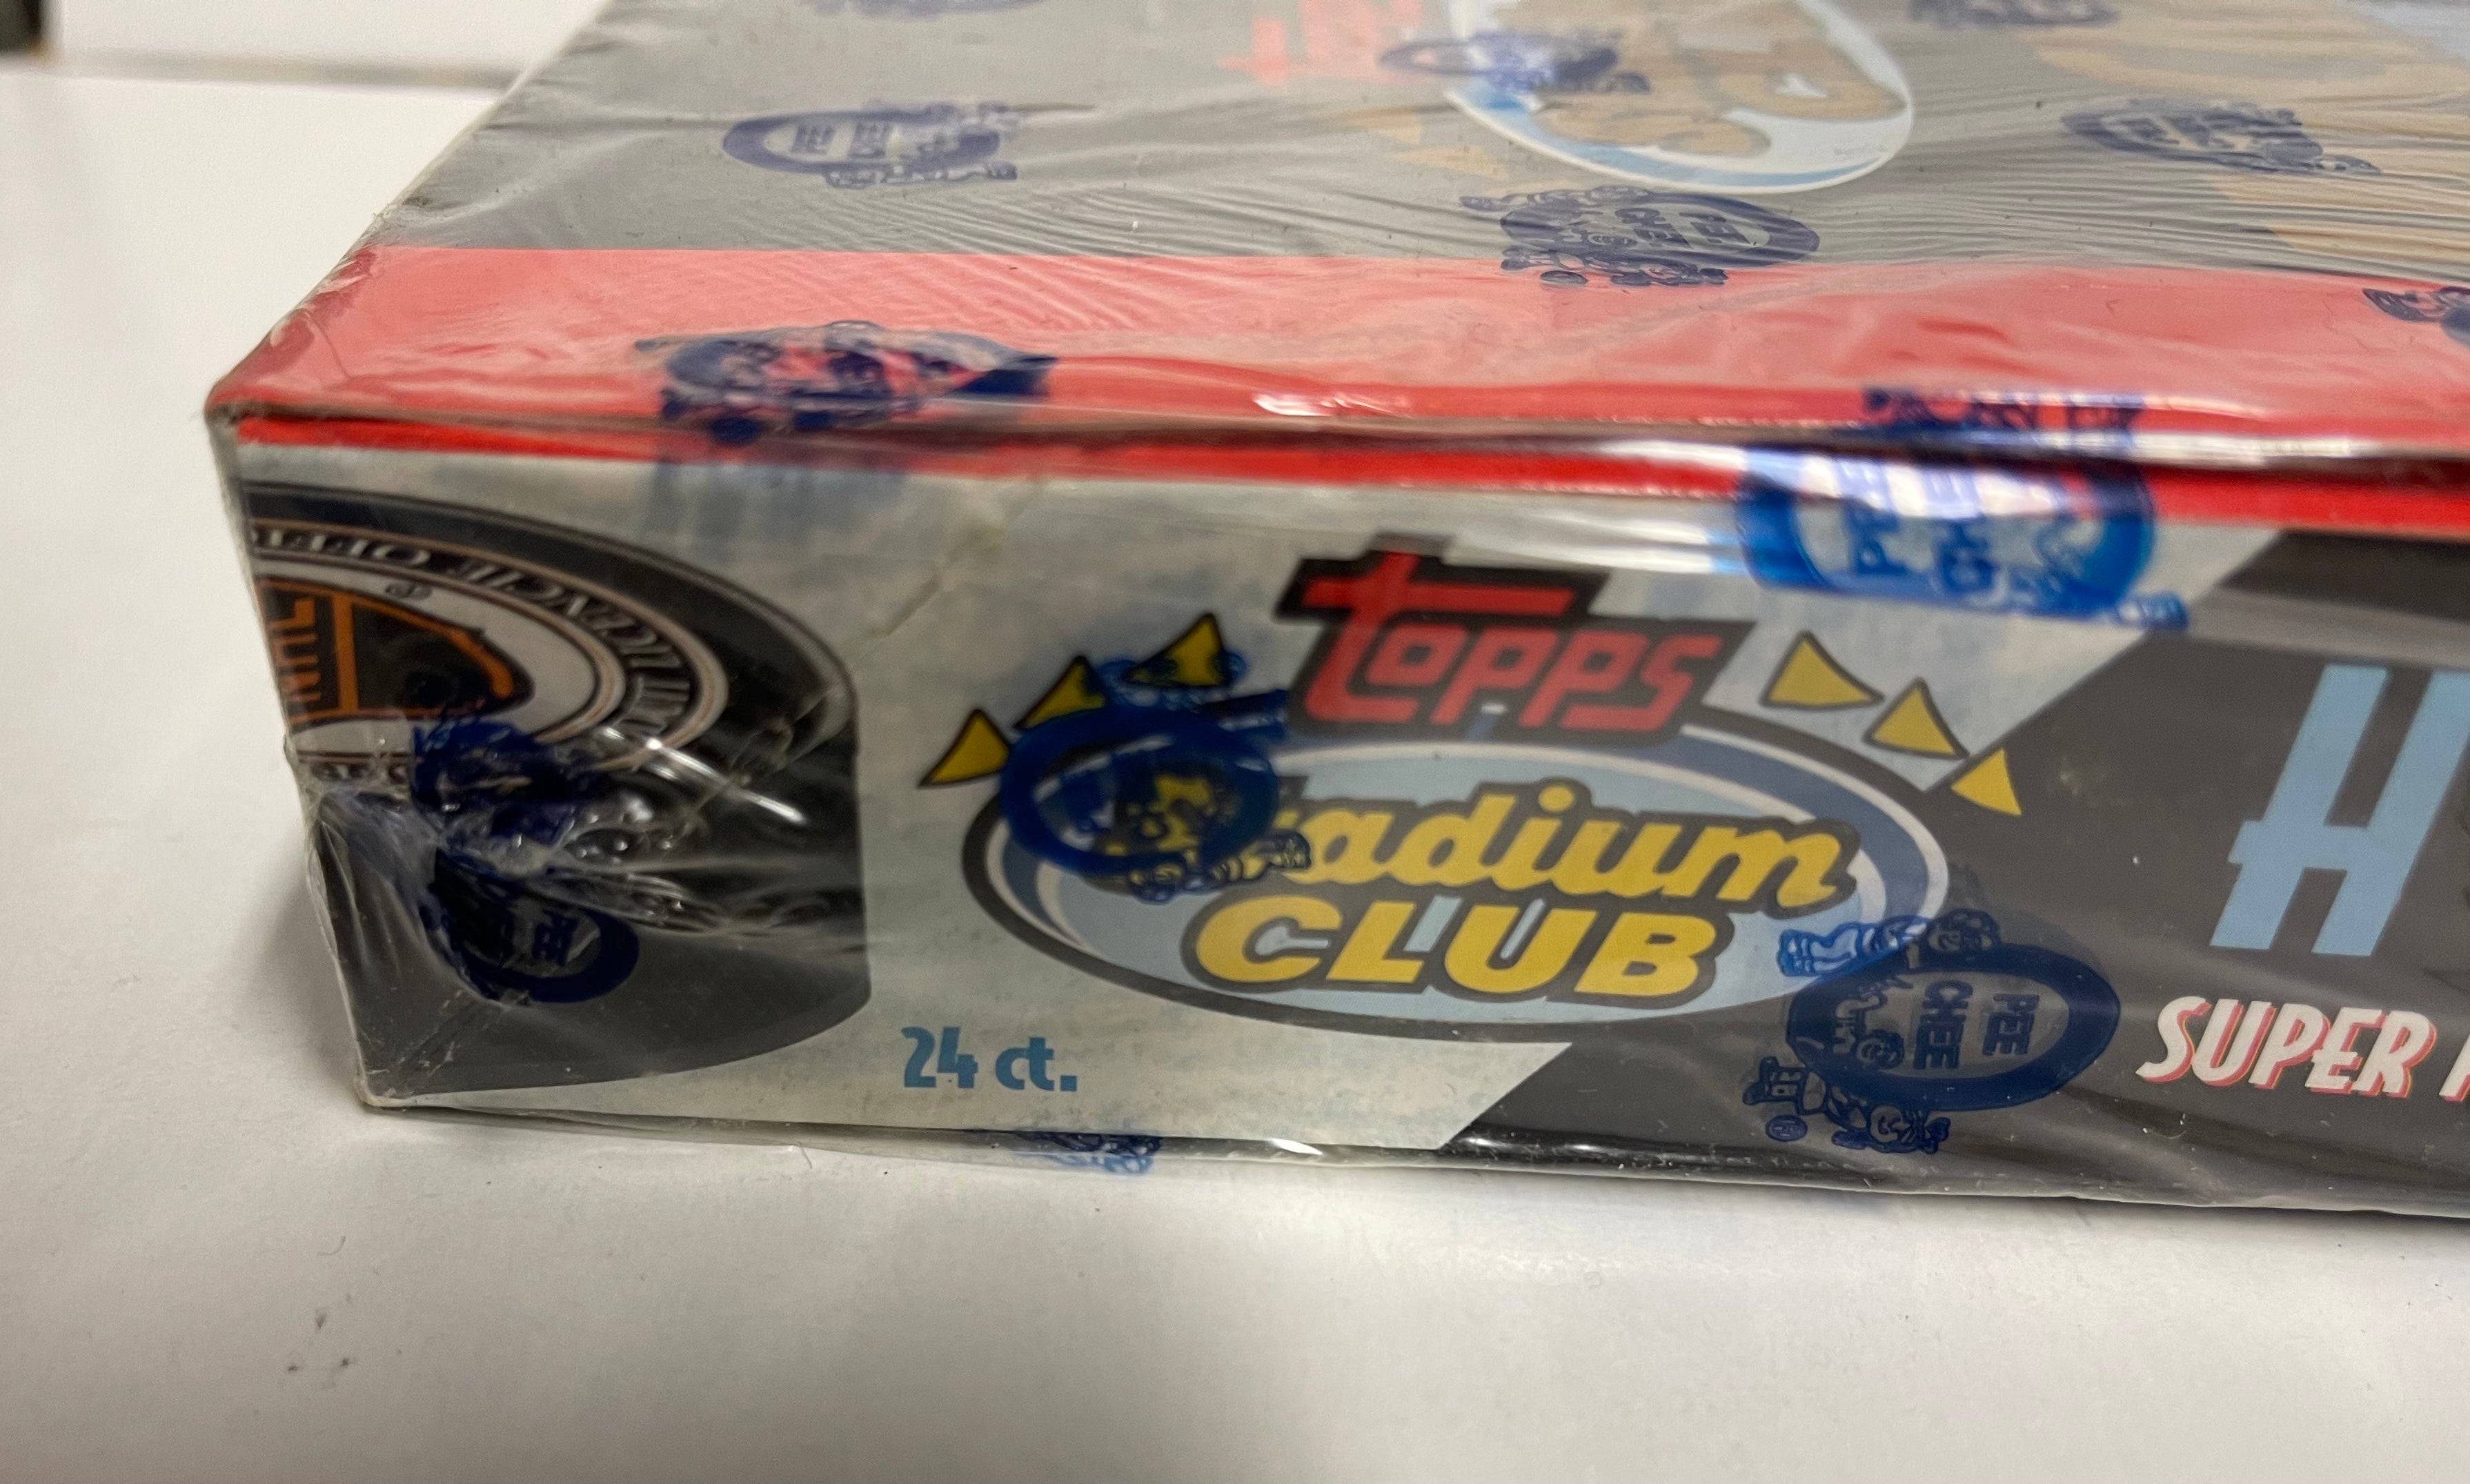 1993-94 O-pee-chee Stadium Club series 1 factory sealed hockey cards box